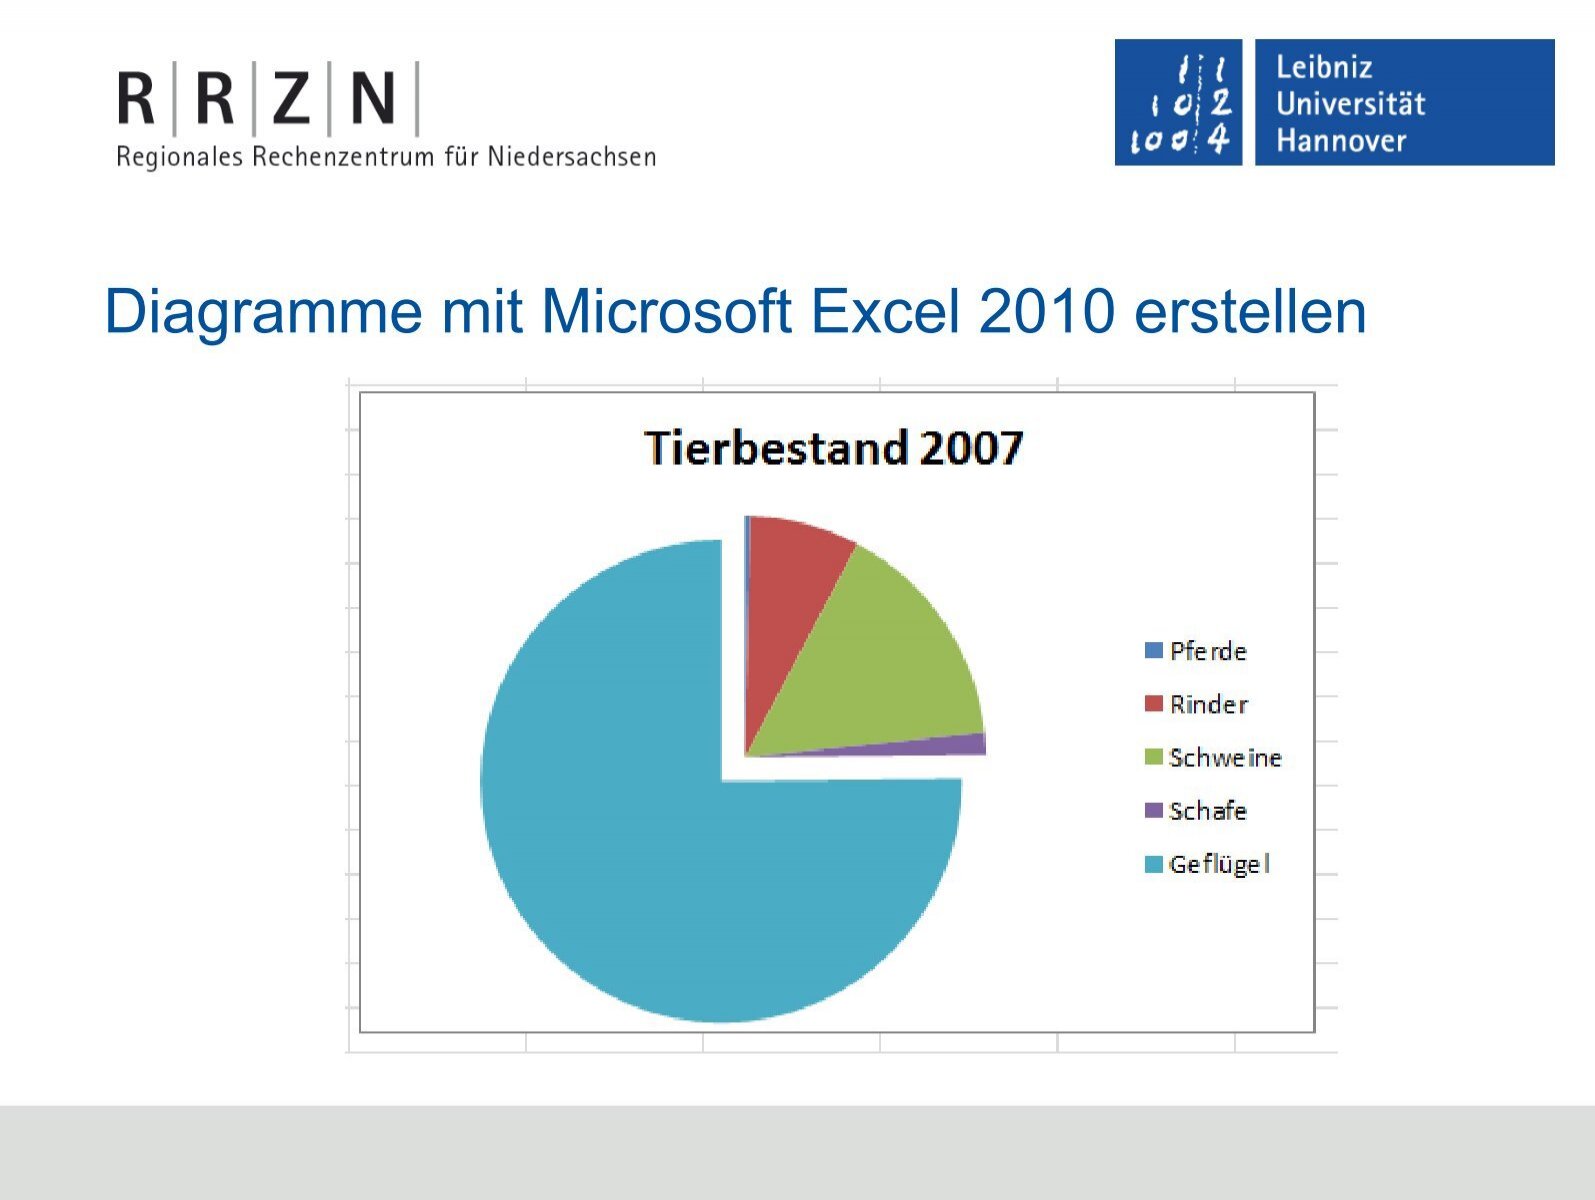 Excel Diagramme Rrzn